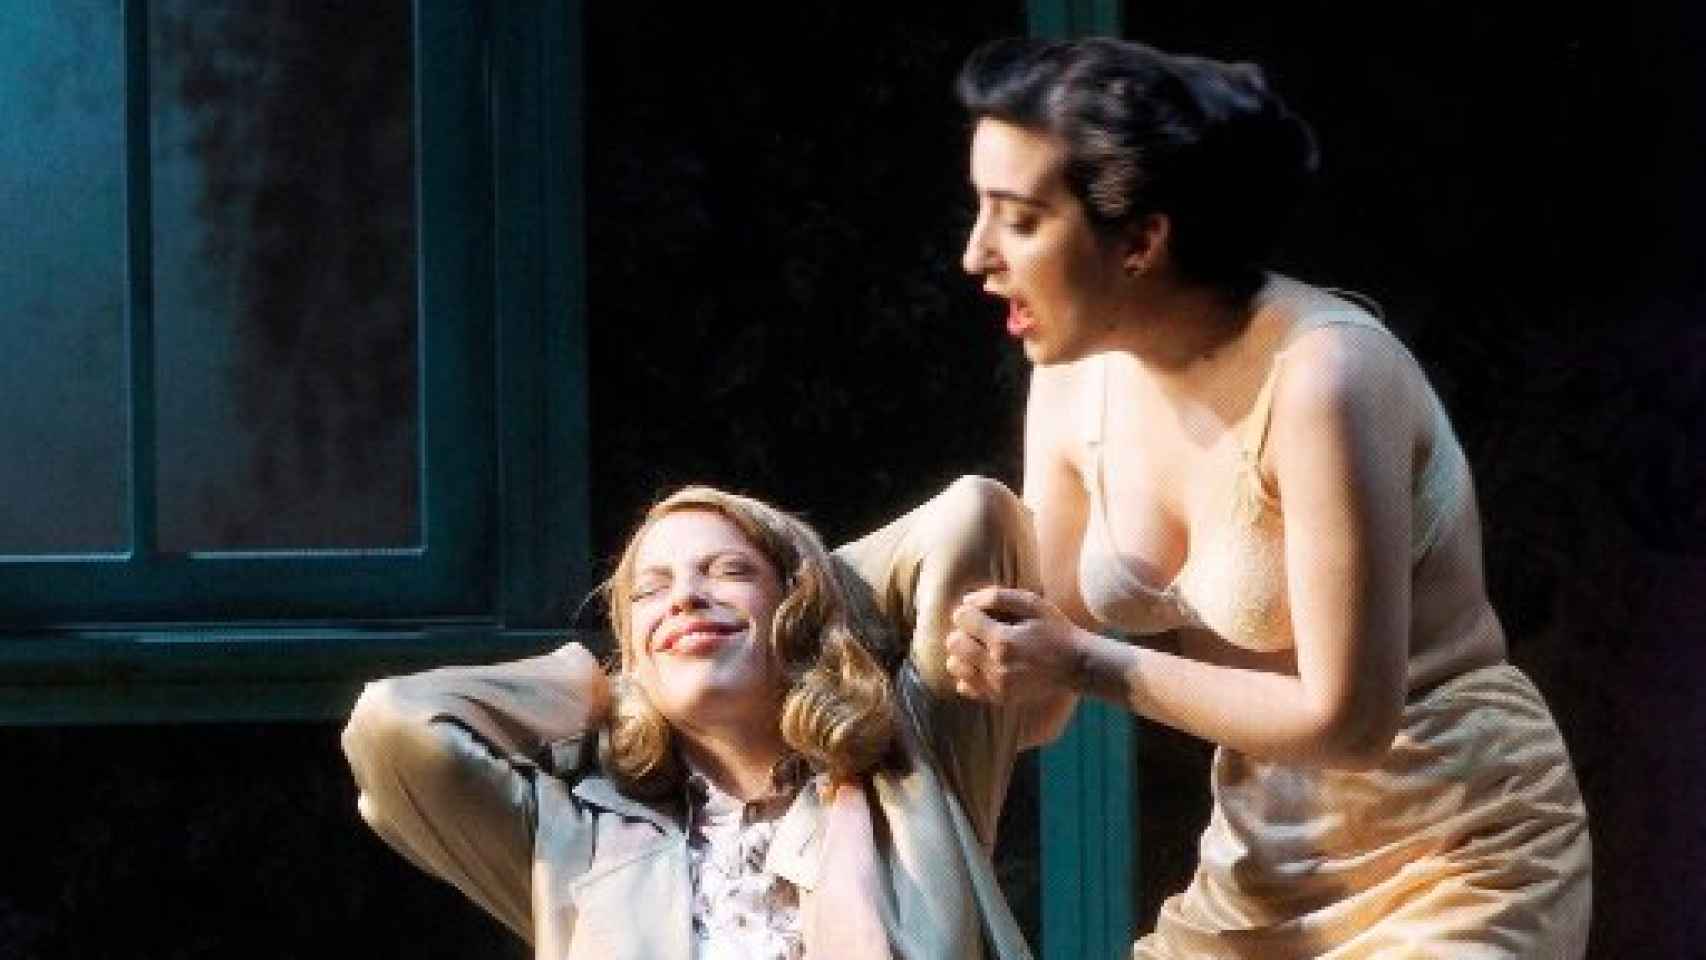 Image: Le malentendu, Camus en la ópera